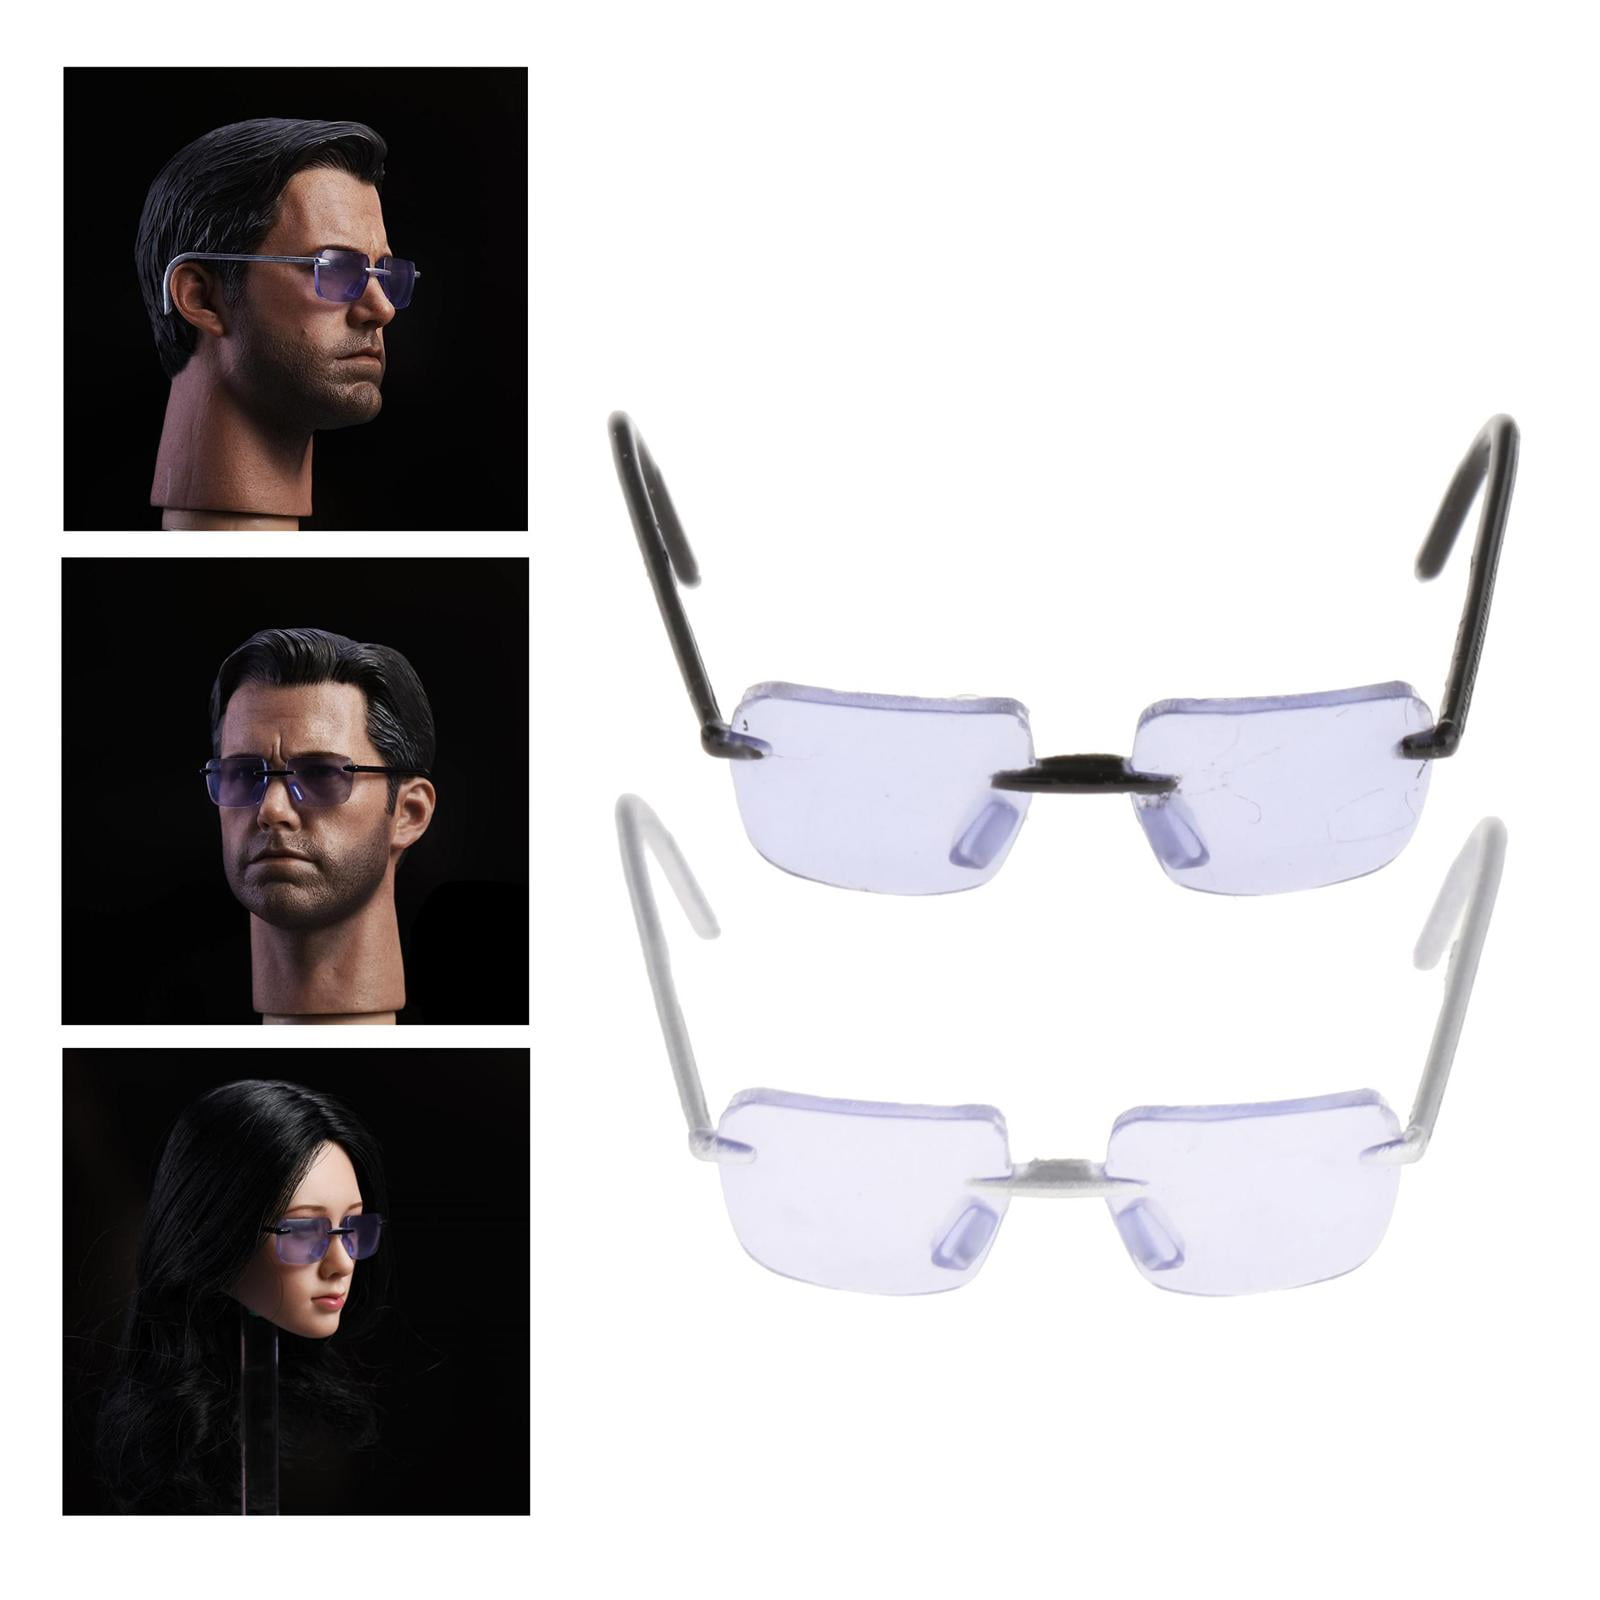 Black Plastic Goggles Accessory for 12" Action Figure1:6 scale 